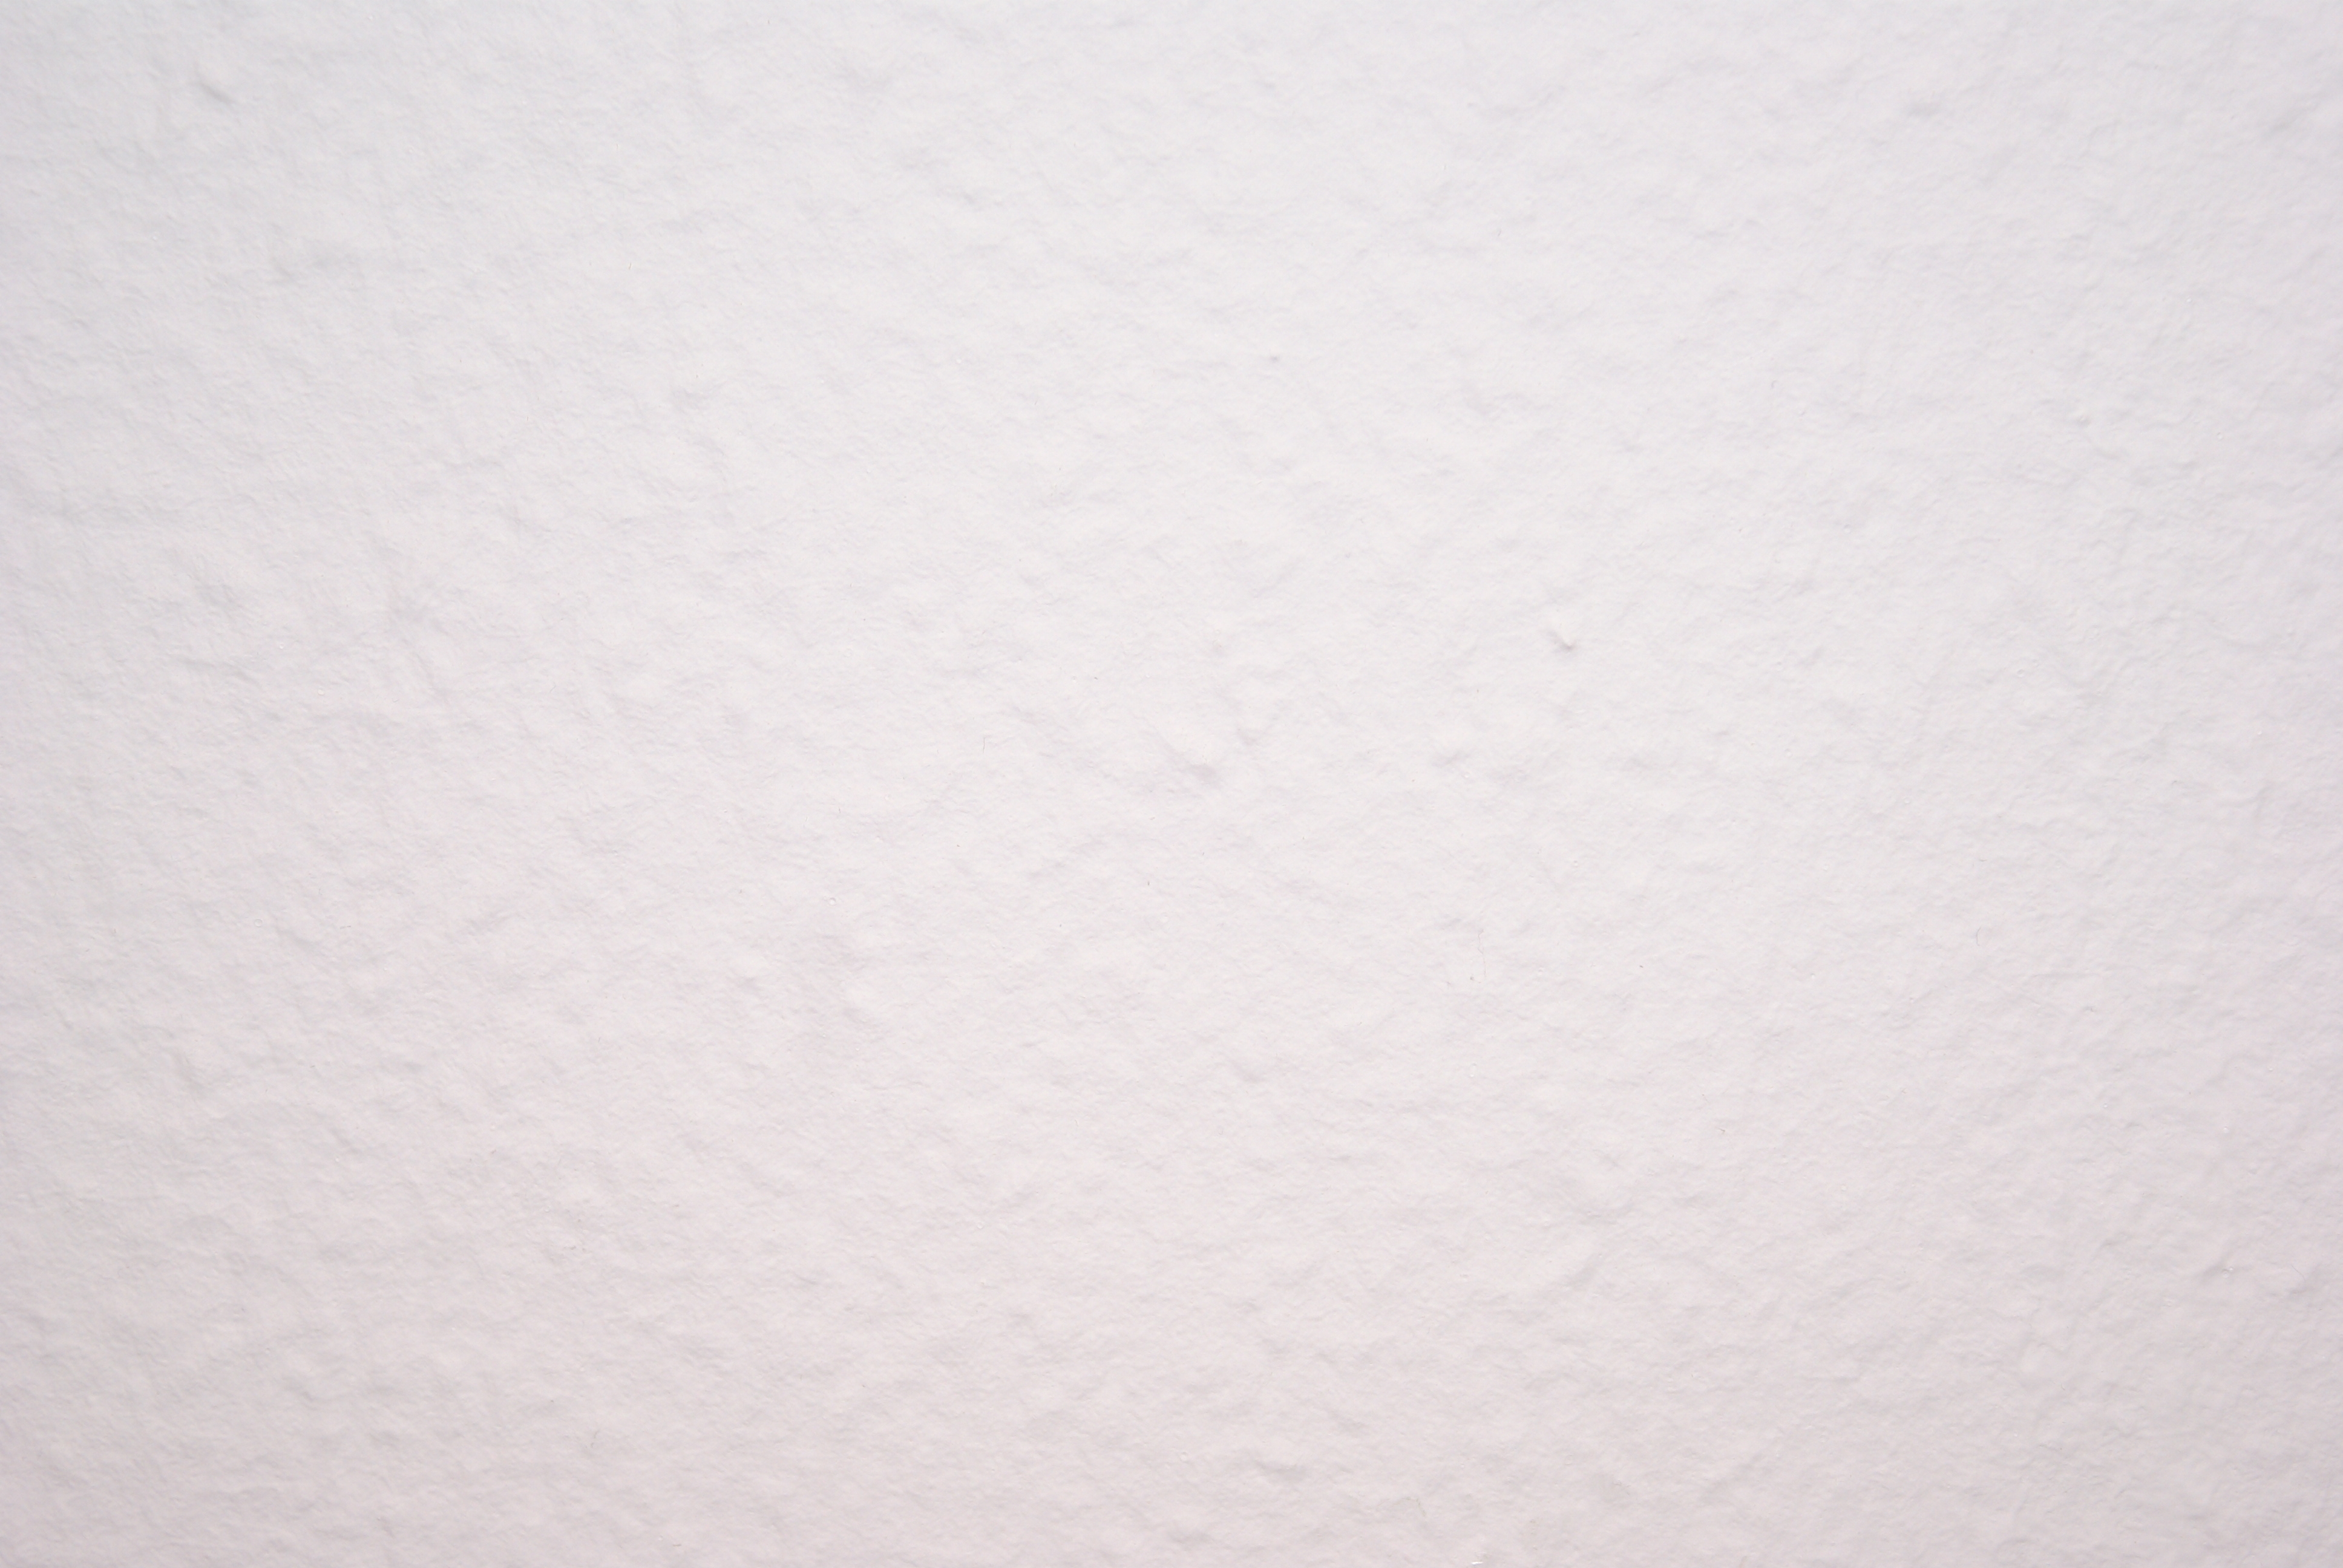 white wallpaper flash by Blackysub3d on